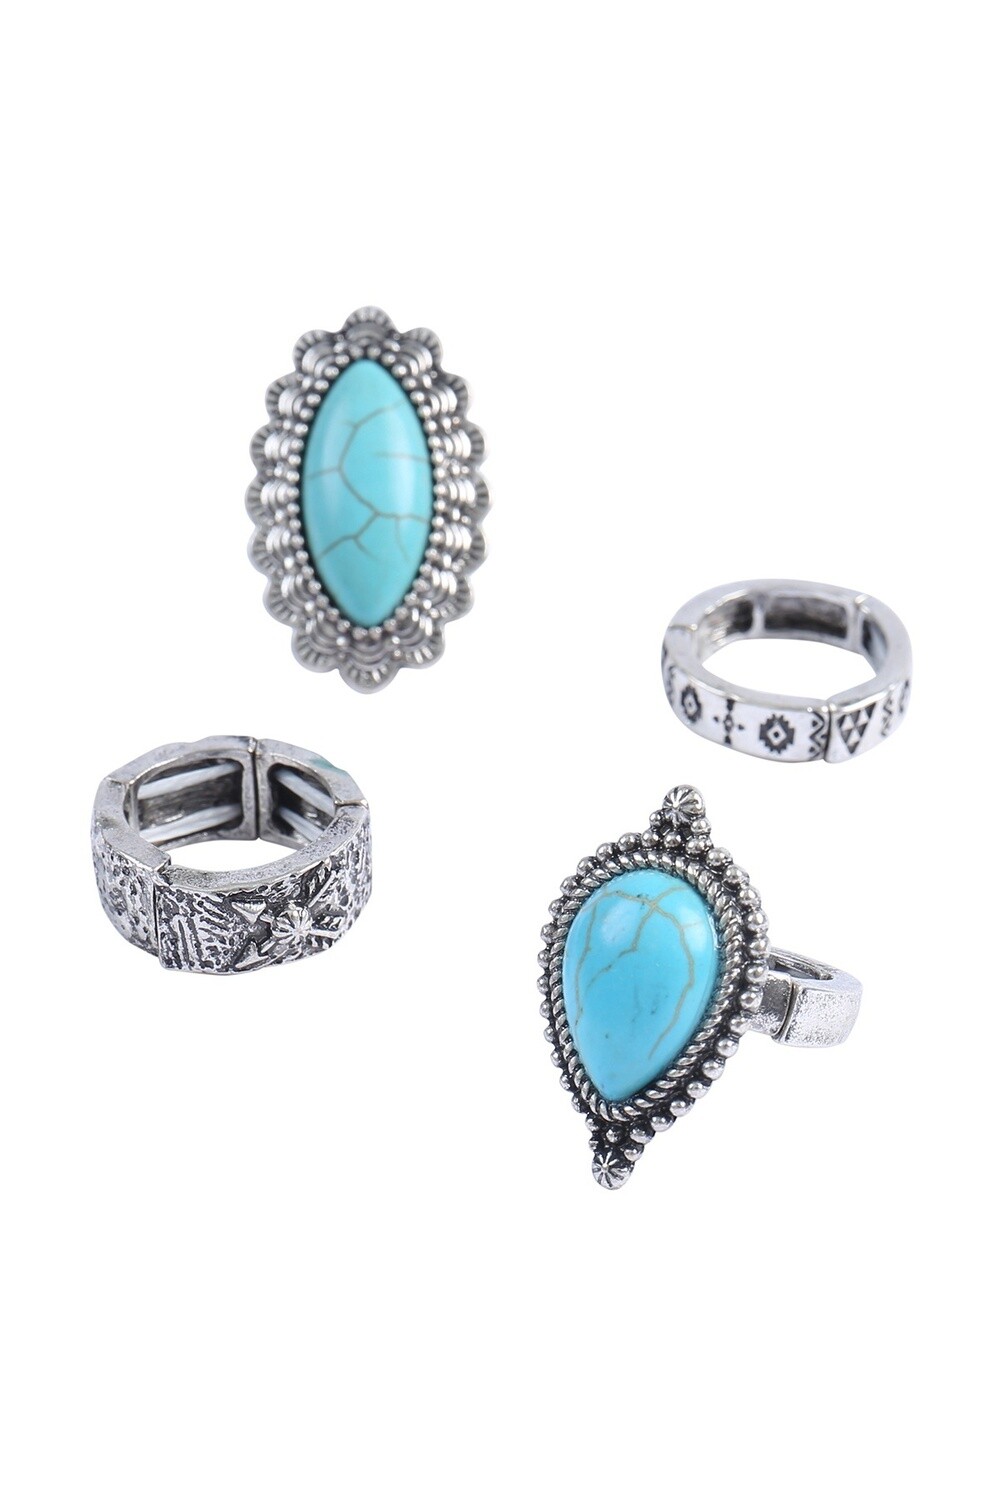 Western Concho Aztec Turquoise Ring Set